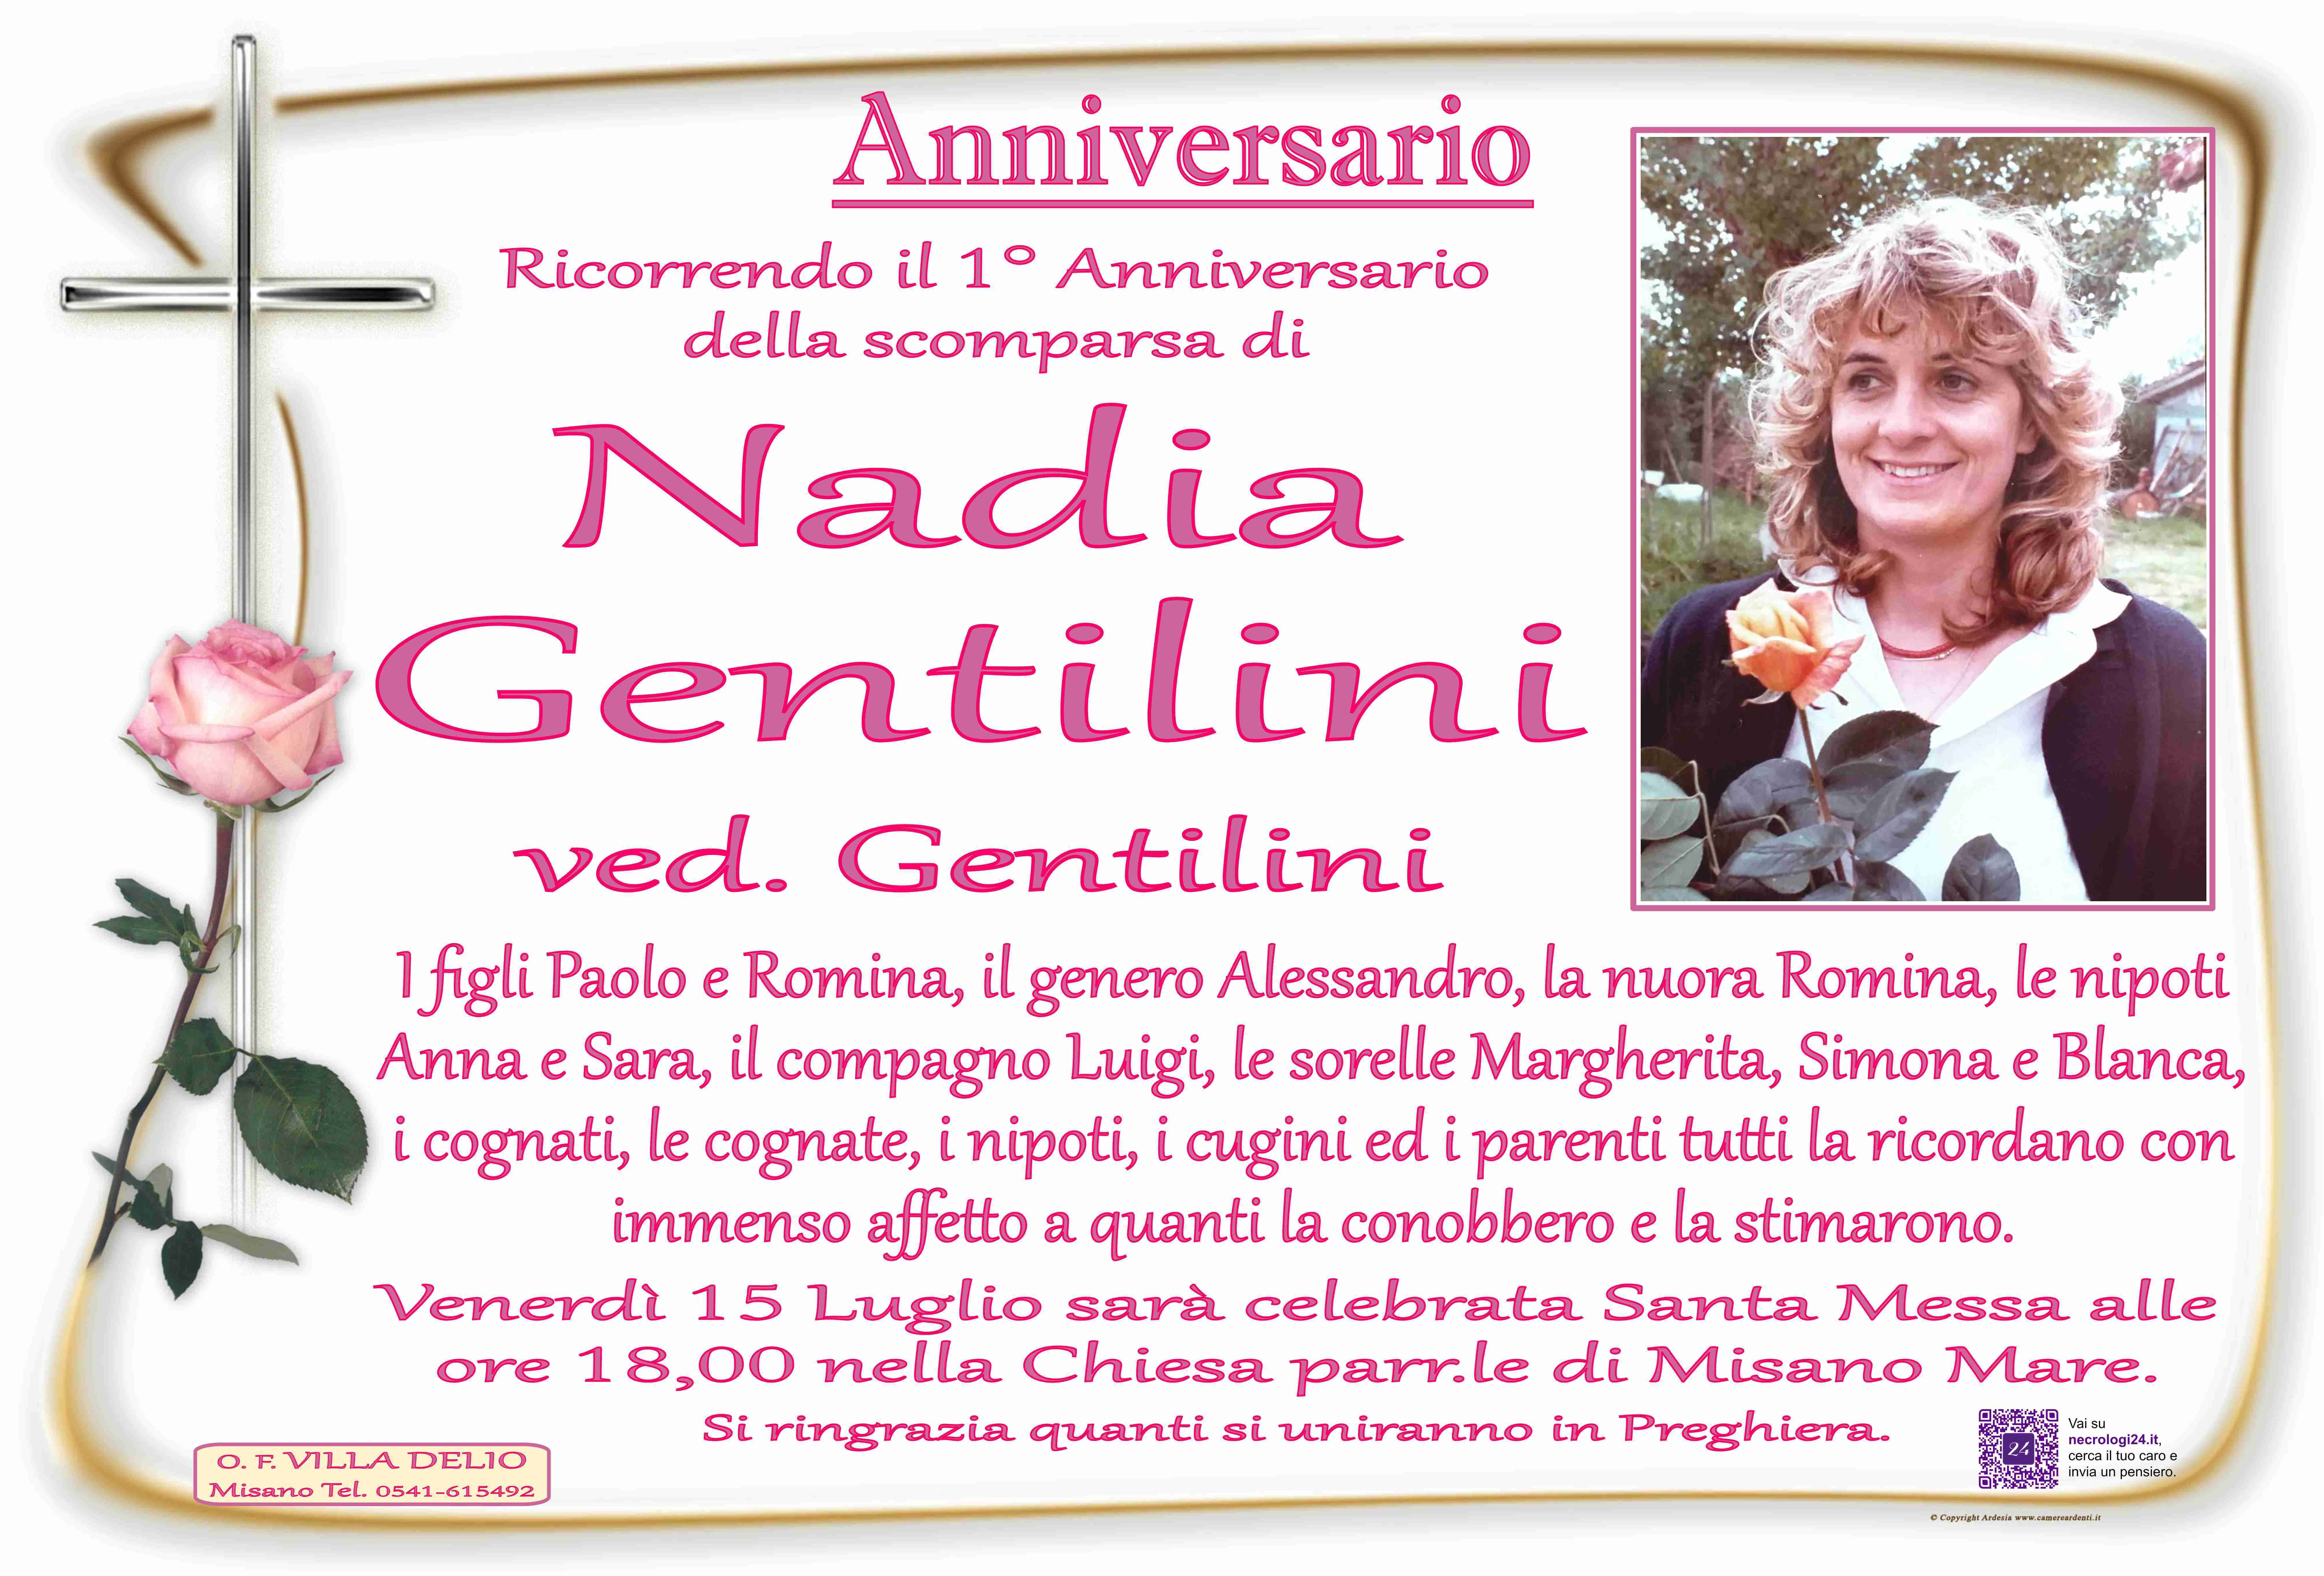 Nadia Gentilini